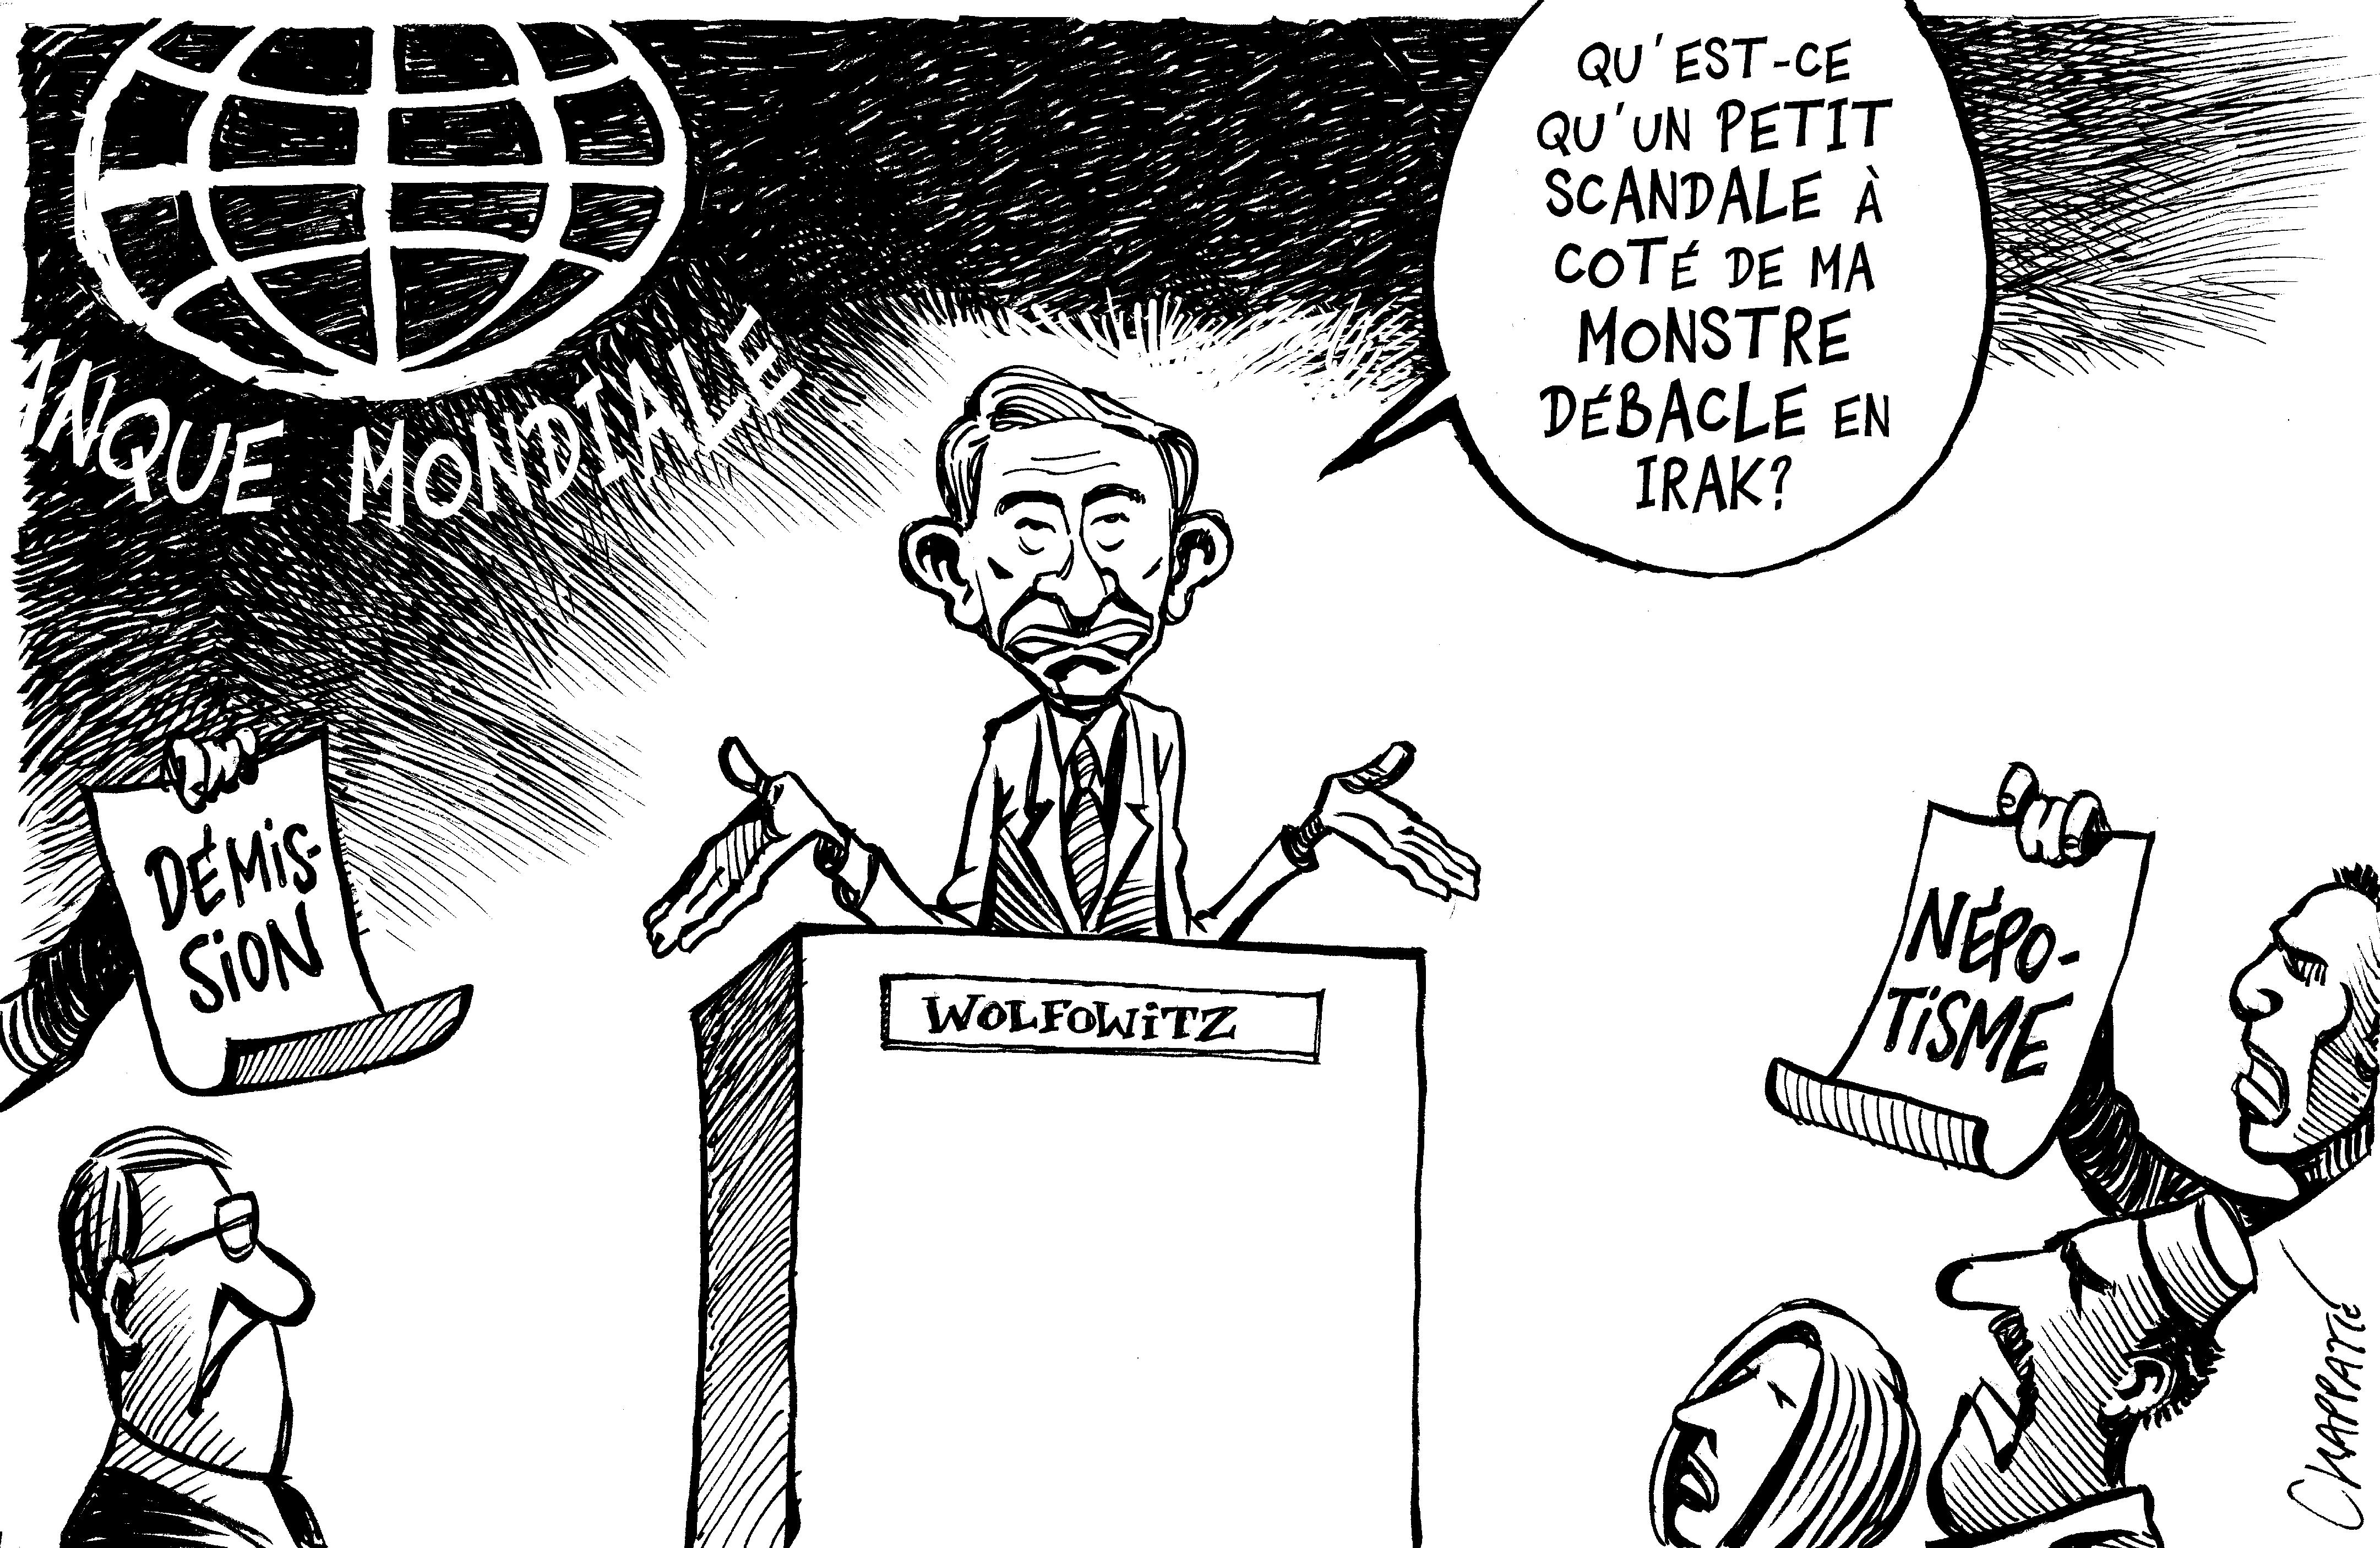 Wolfowitz: scandale de favoristisme